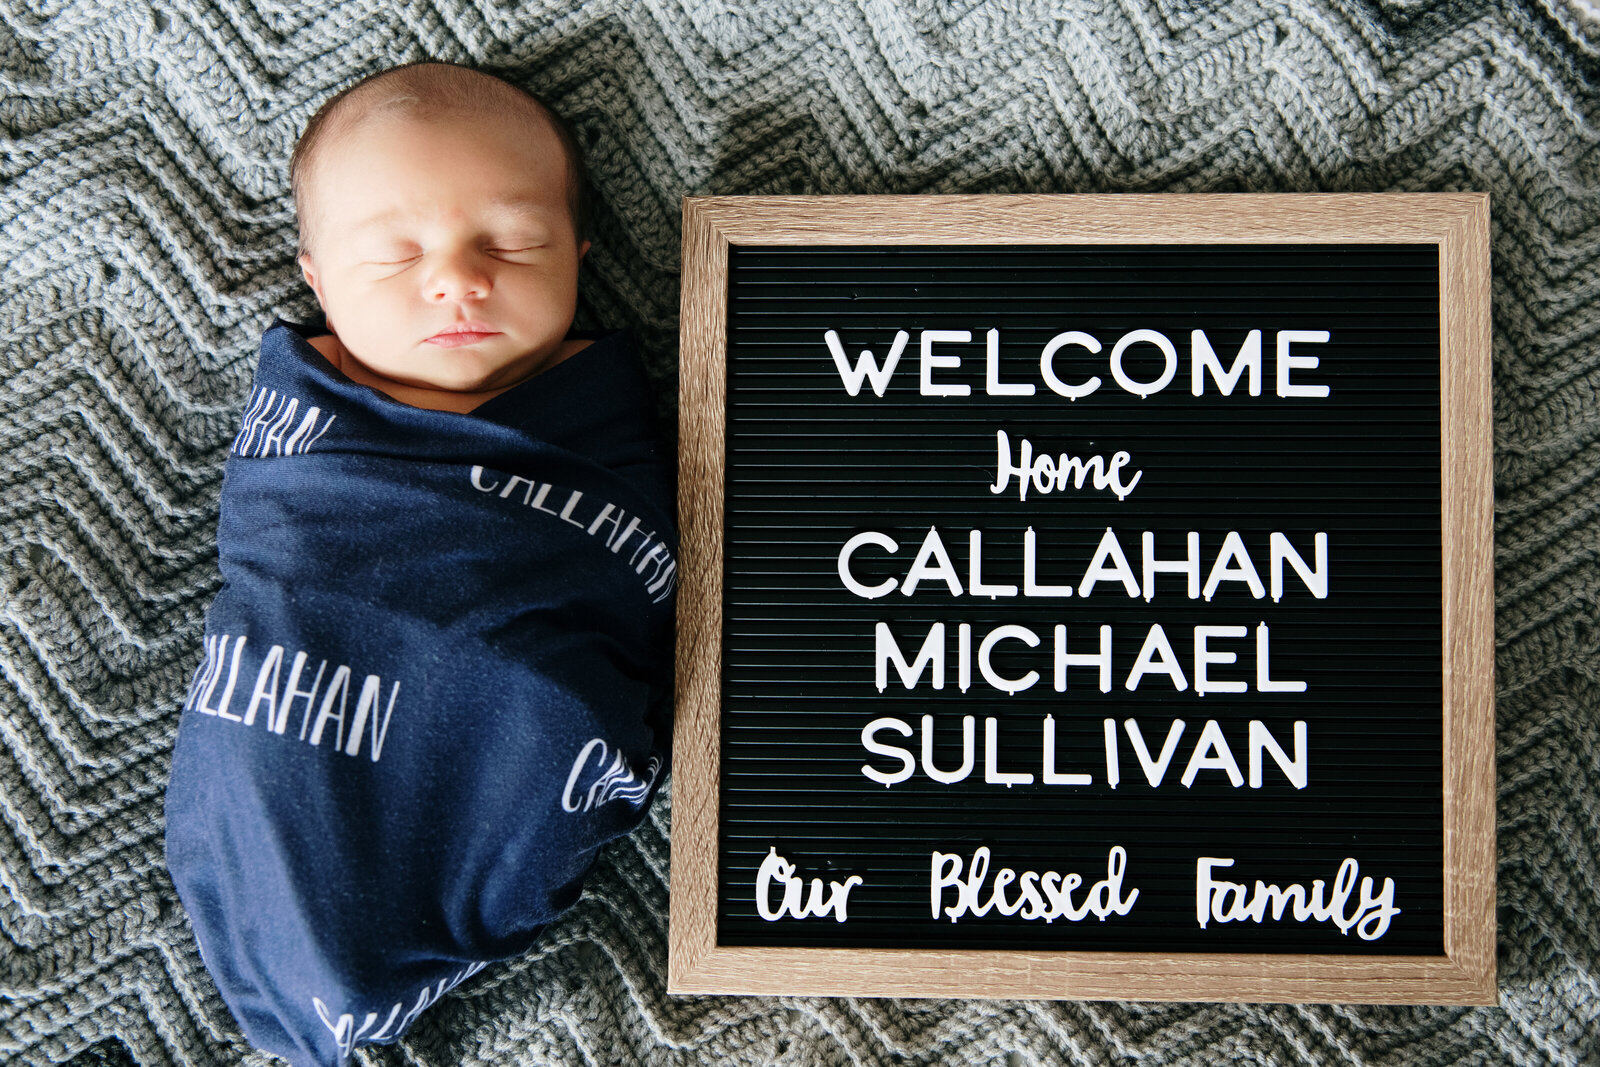 Callahan-newborn-94